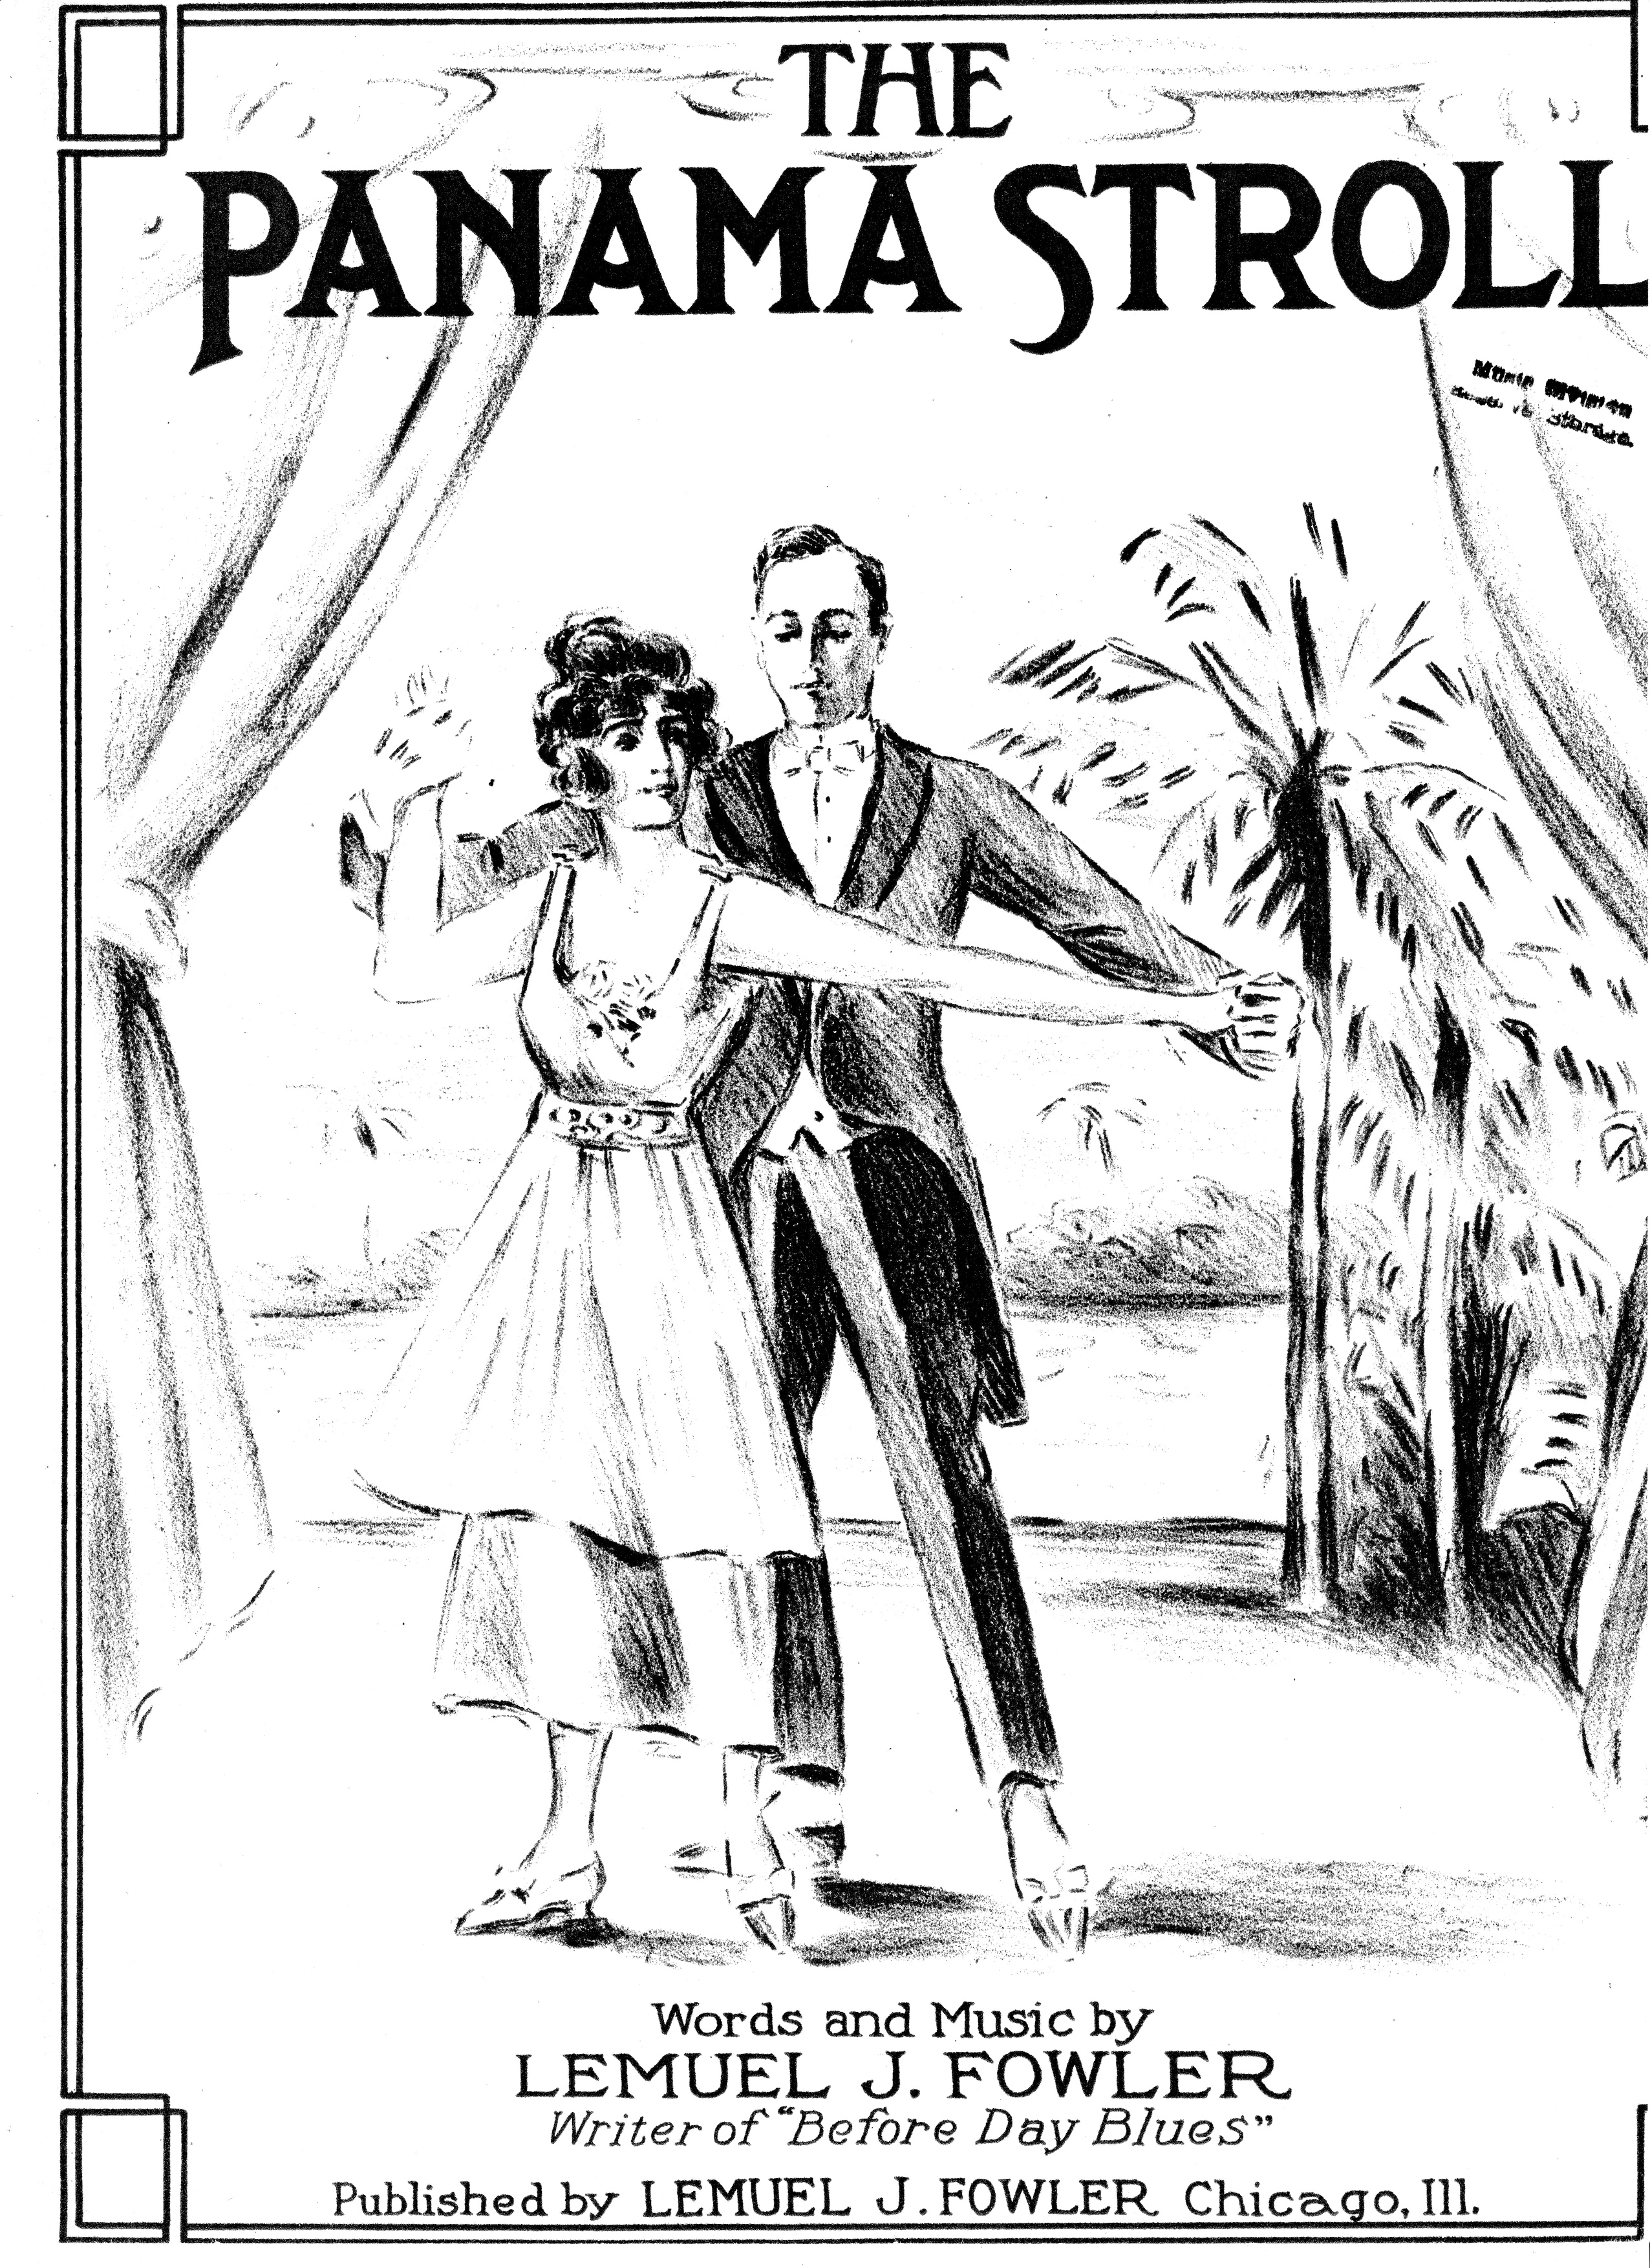 Panama Stroll cover, 1919